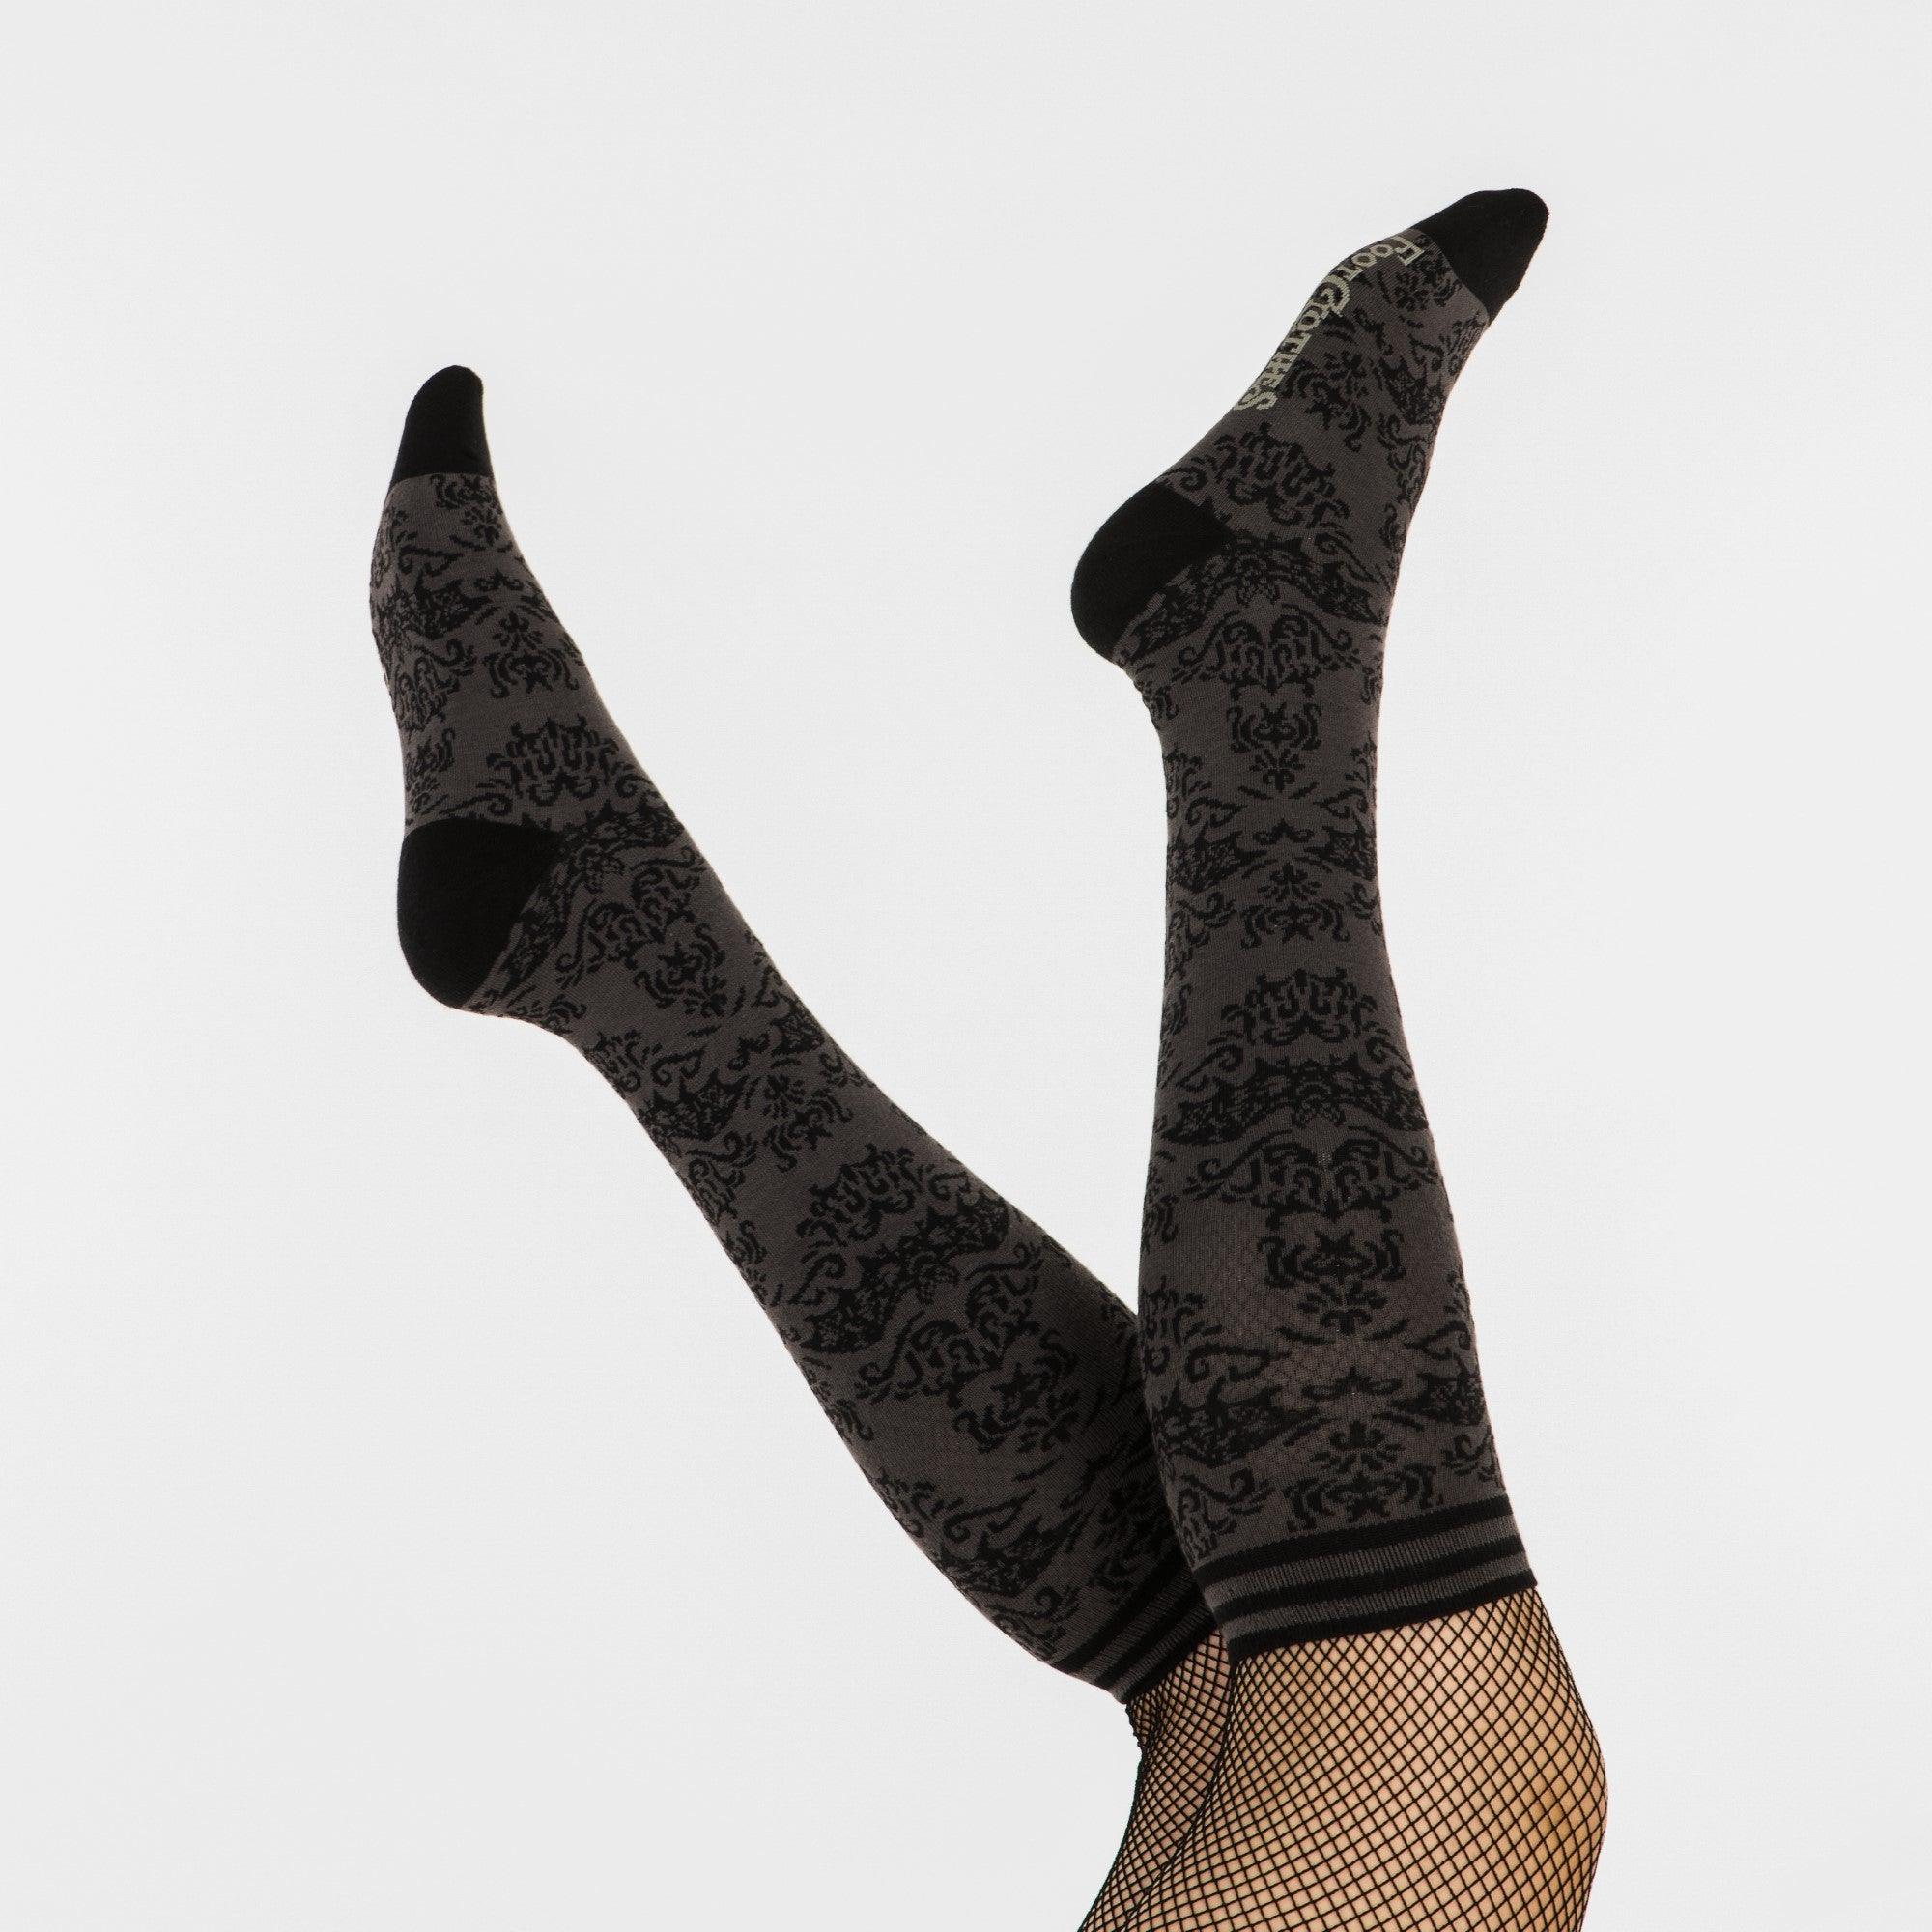 Bat Damask Knee High Socks - FootClothes